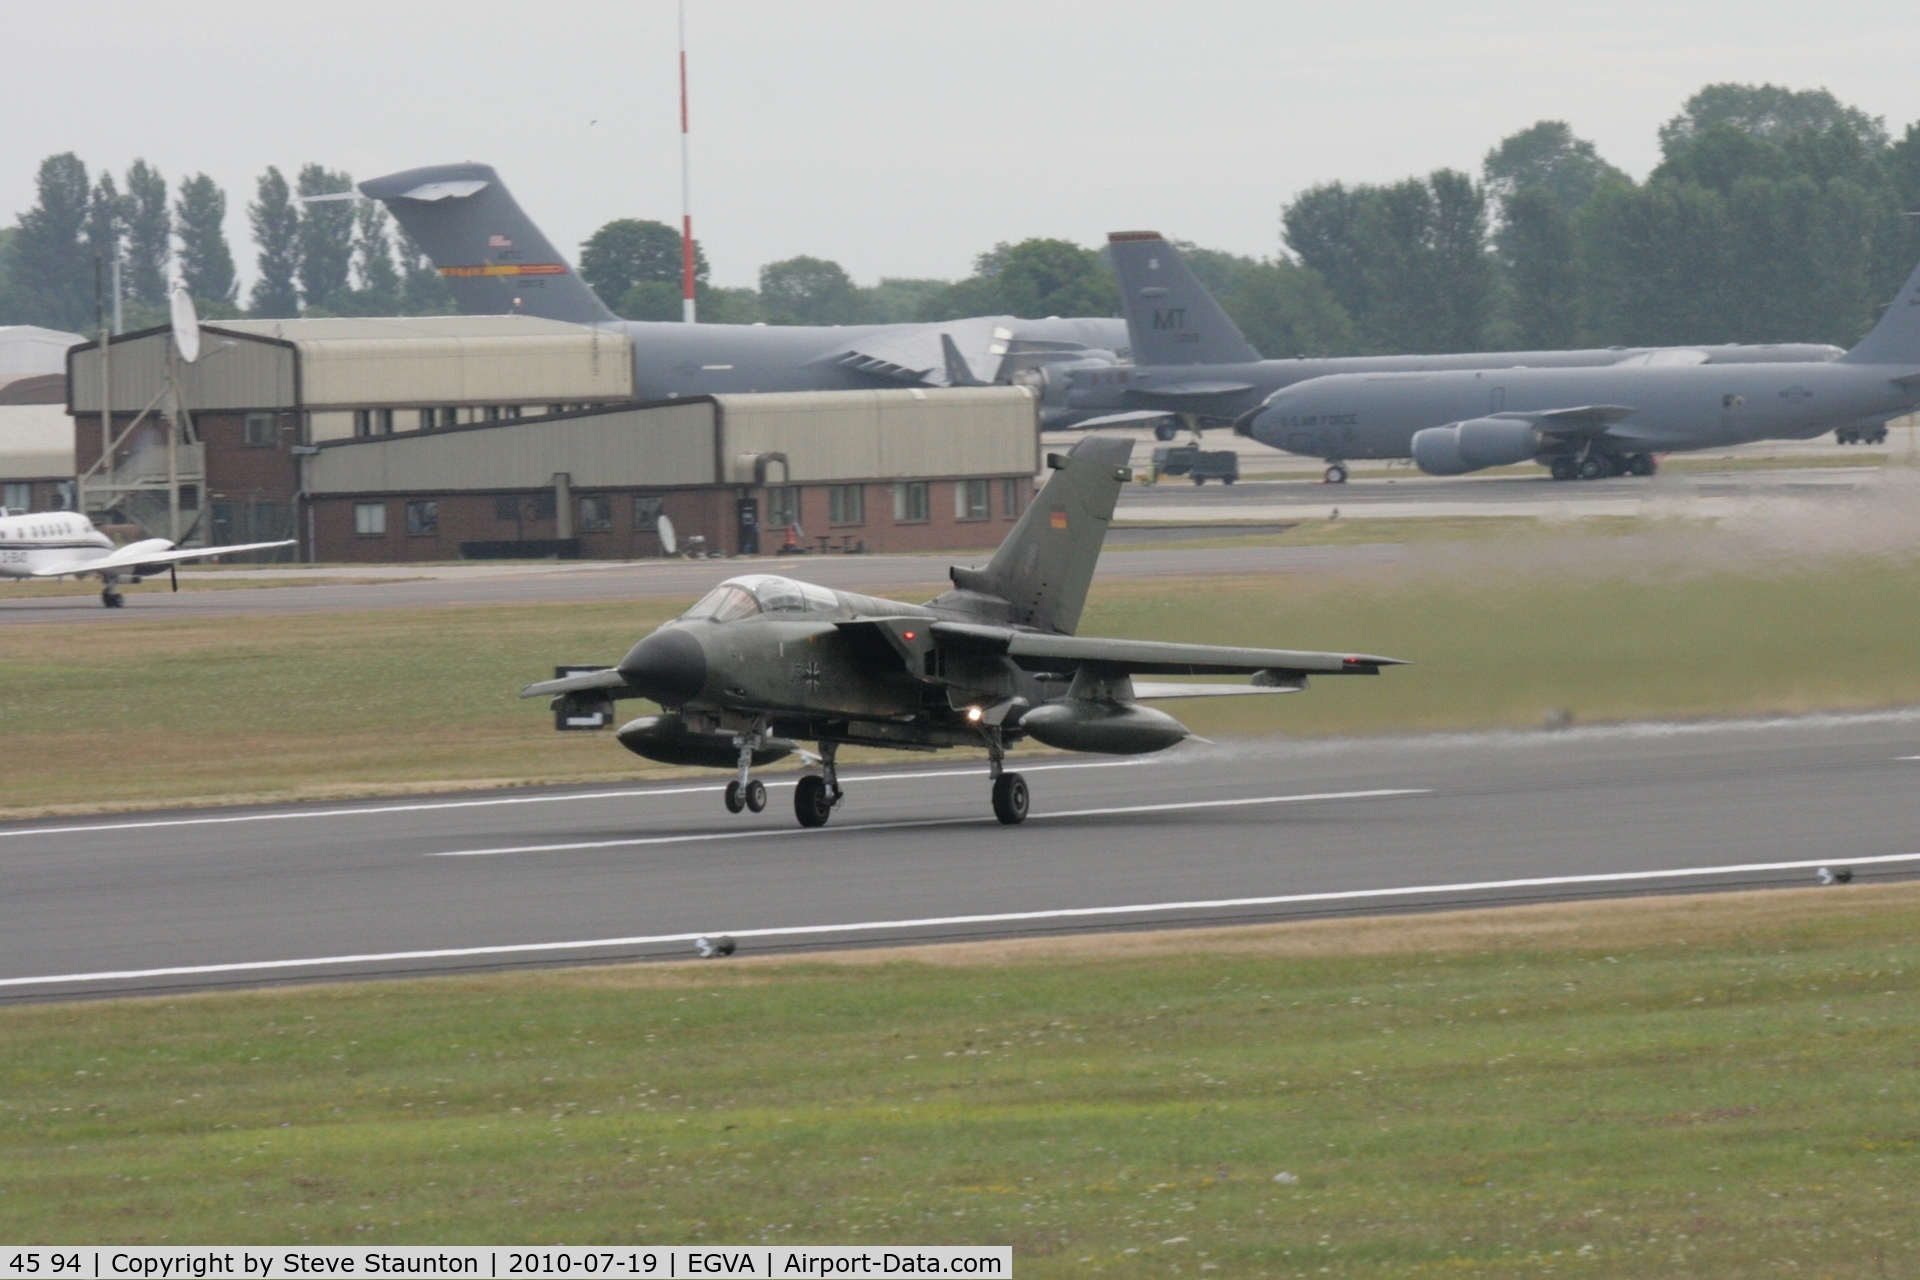 45 94, Panavia Tornado IDS C/N 729/GS235/4294, Taken at the Royal International Air Tattoo 2010